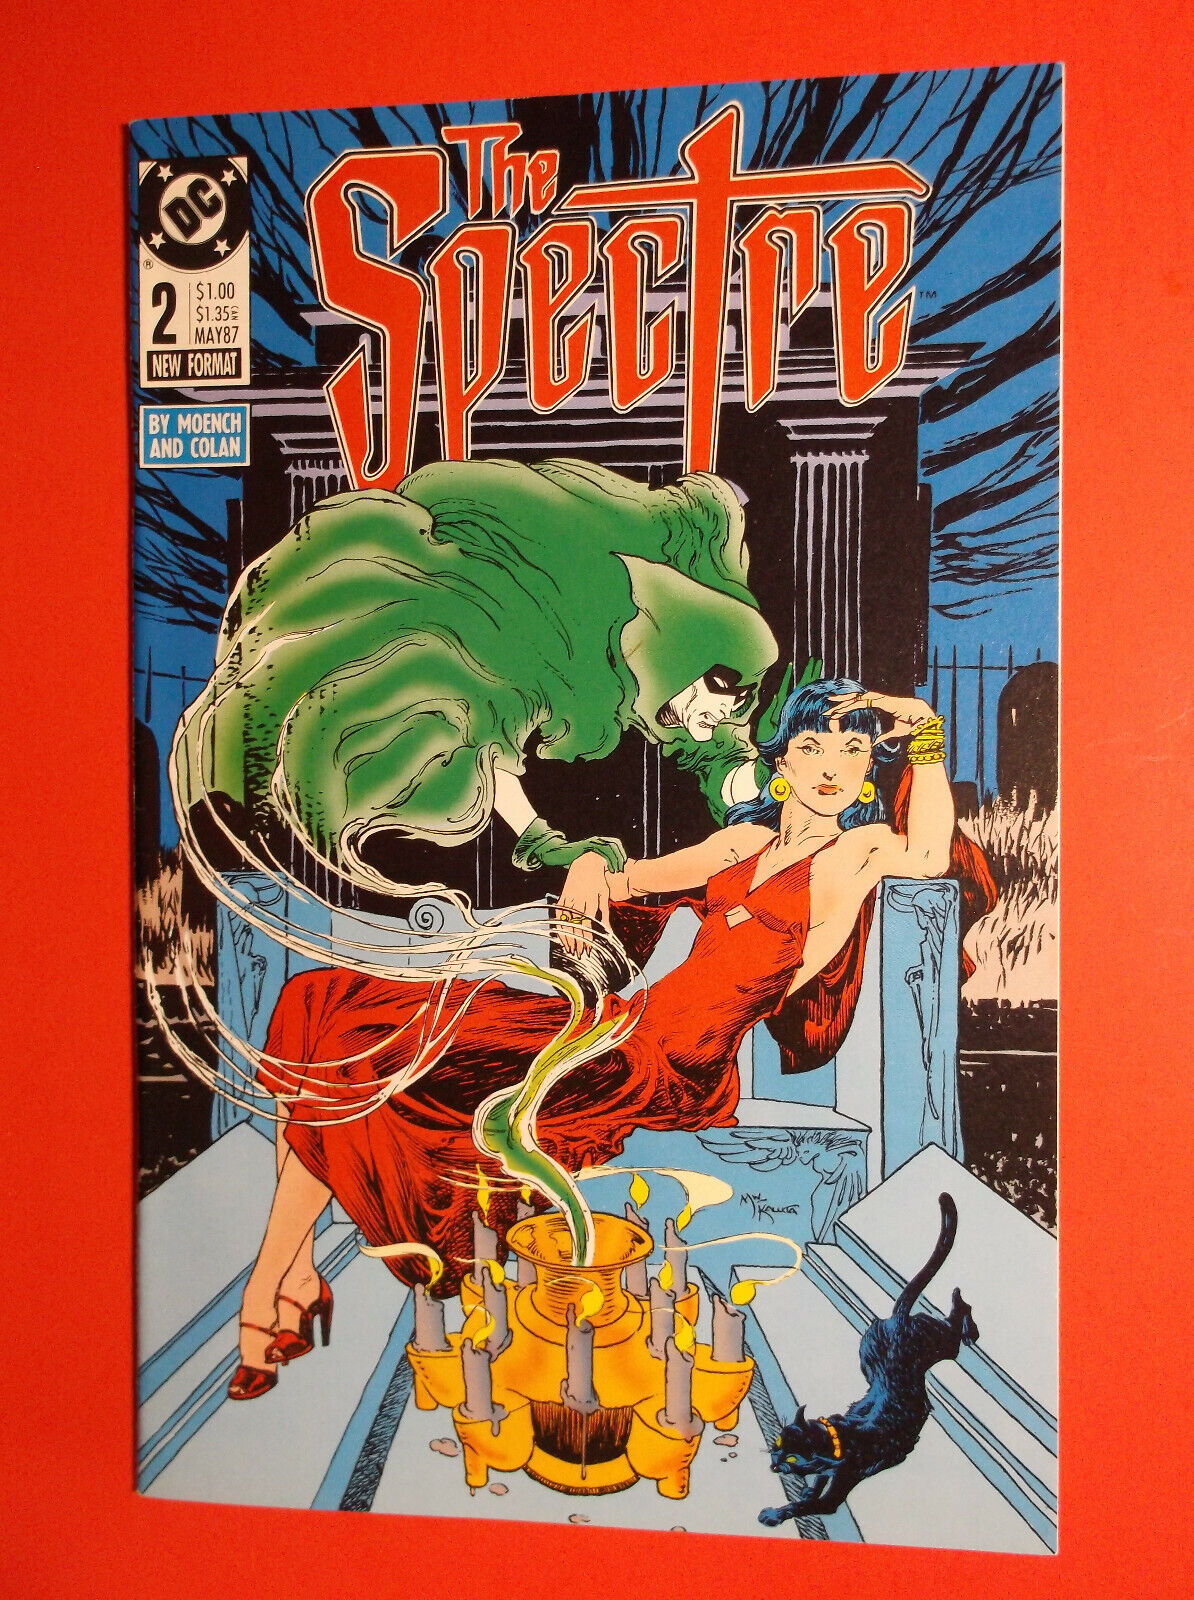 THE SPECTRE (2nd series) # 2 - NM 9.2/9.4 - MADAME XANADU - 1987 UNREAD COPY